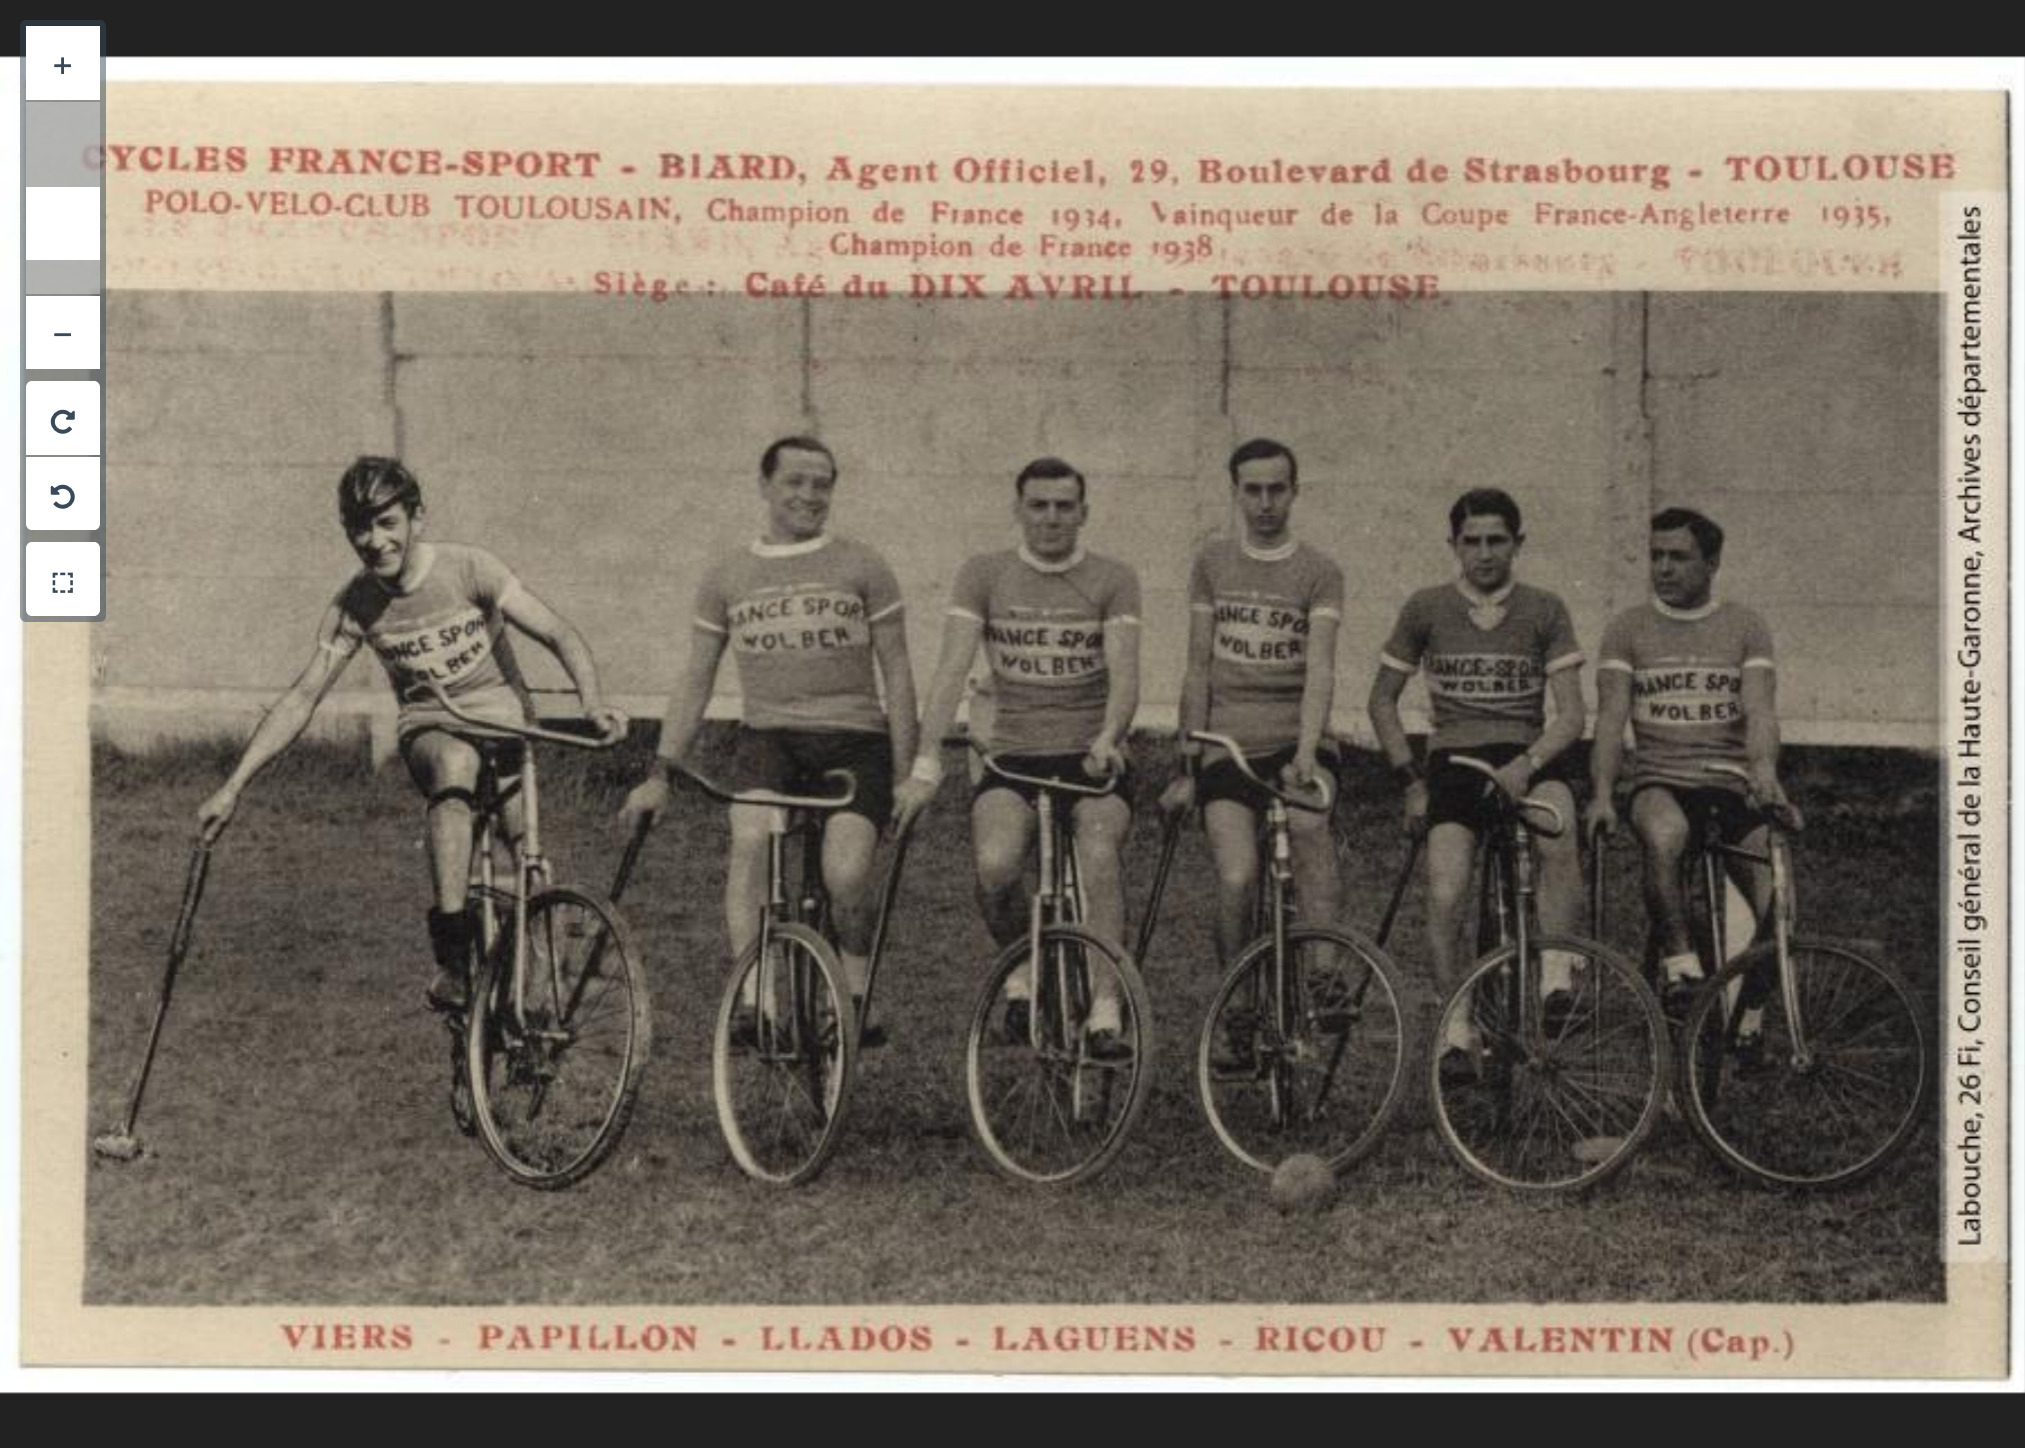 1934_AD31_Cycles France-Sport Biard, agent officiel, 29, boulevard de Strasbourg, Toulous[...].jpg